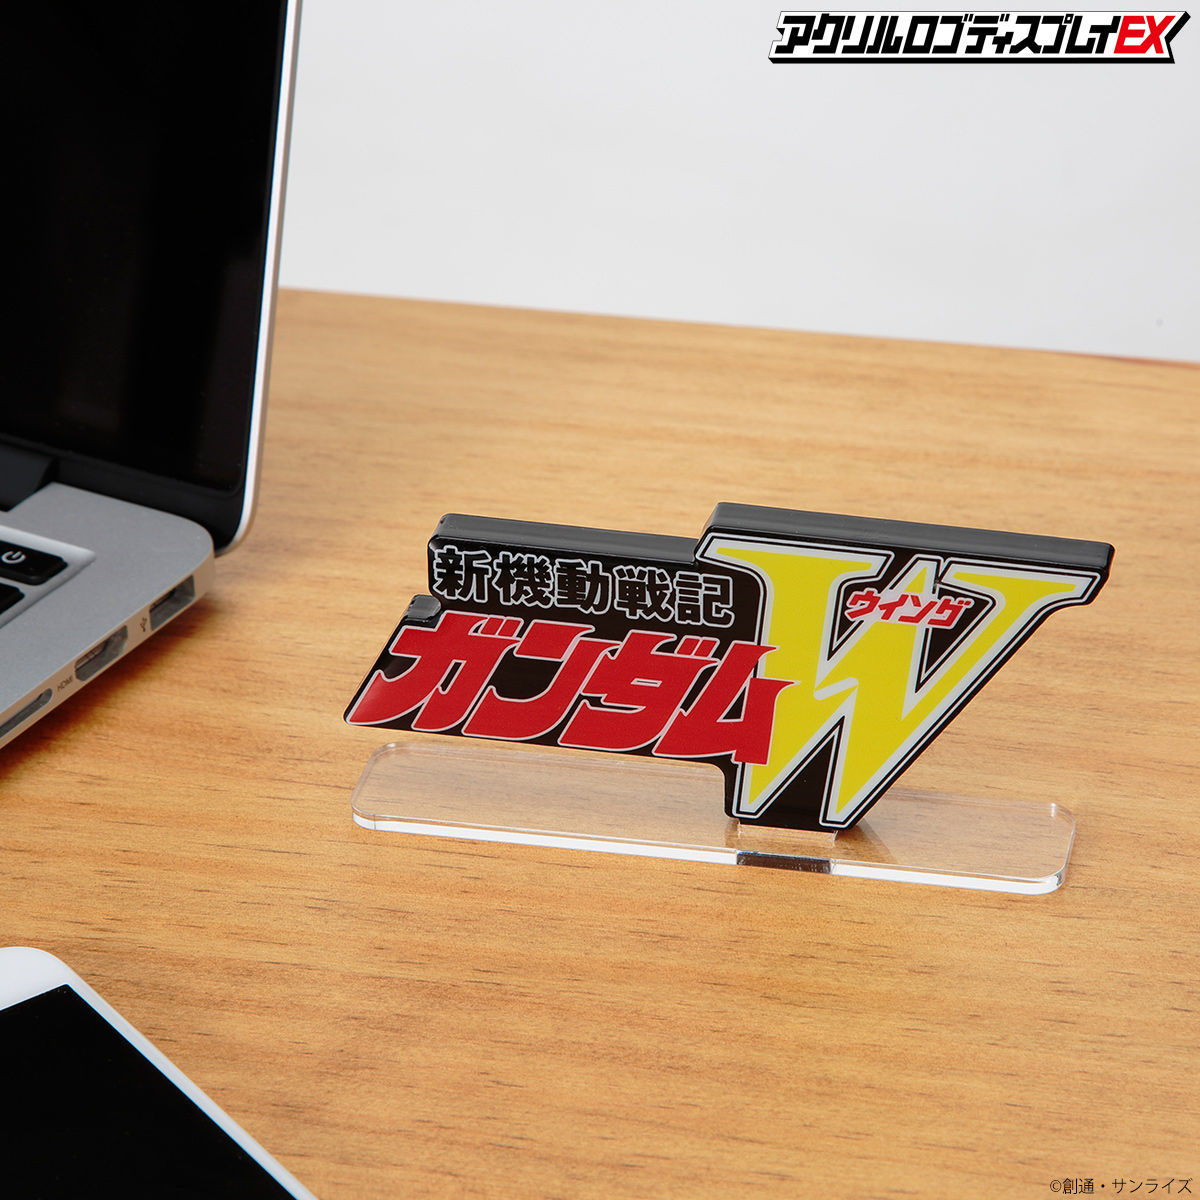 Acrylic Logo Diplay EX-New Mobile Report Gundam Wing